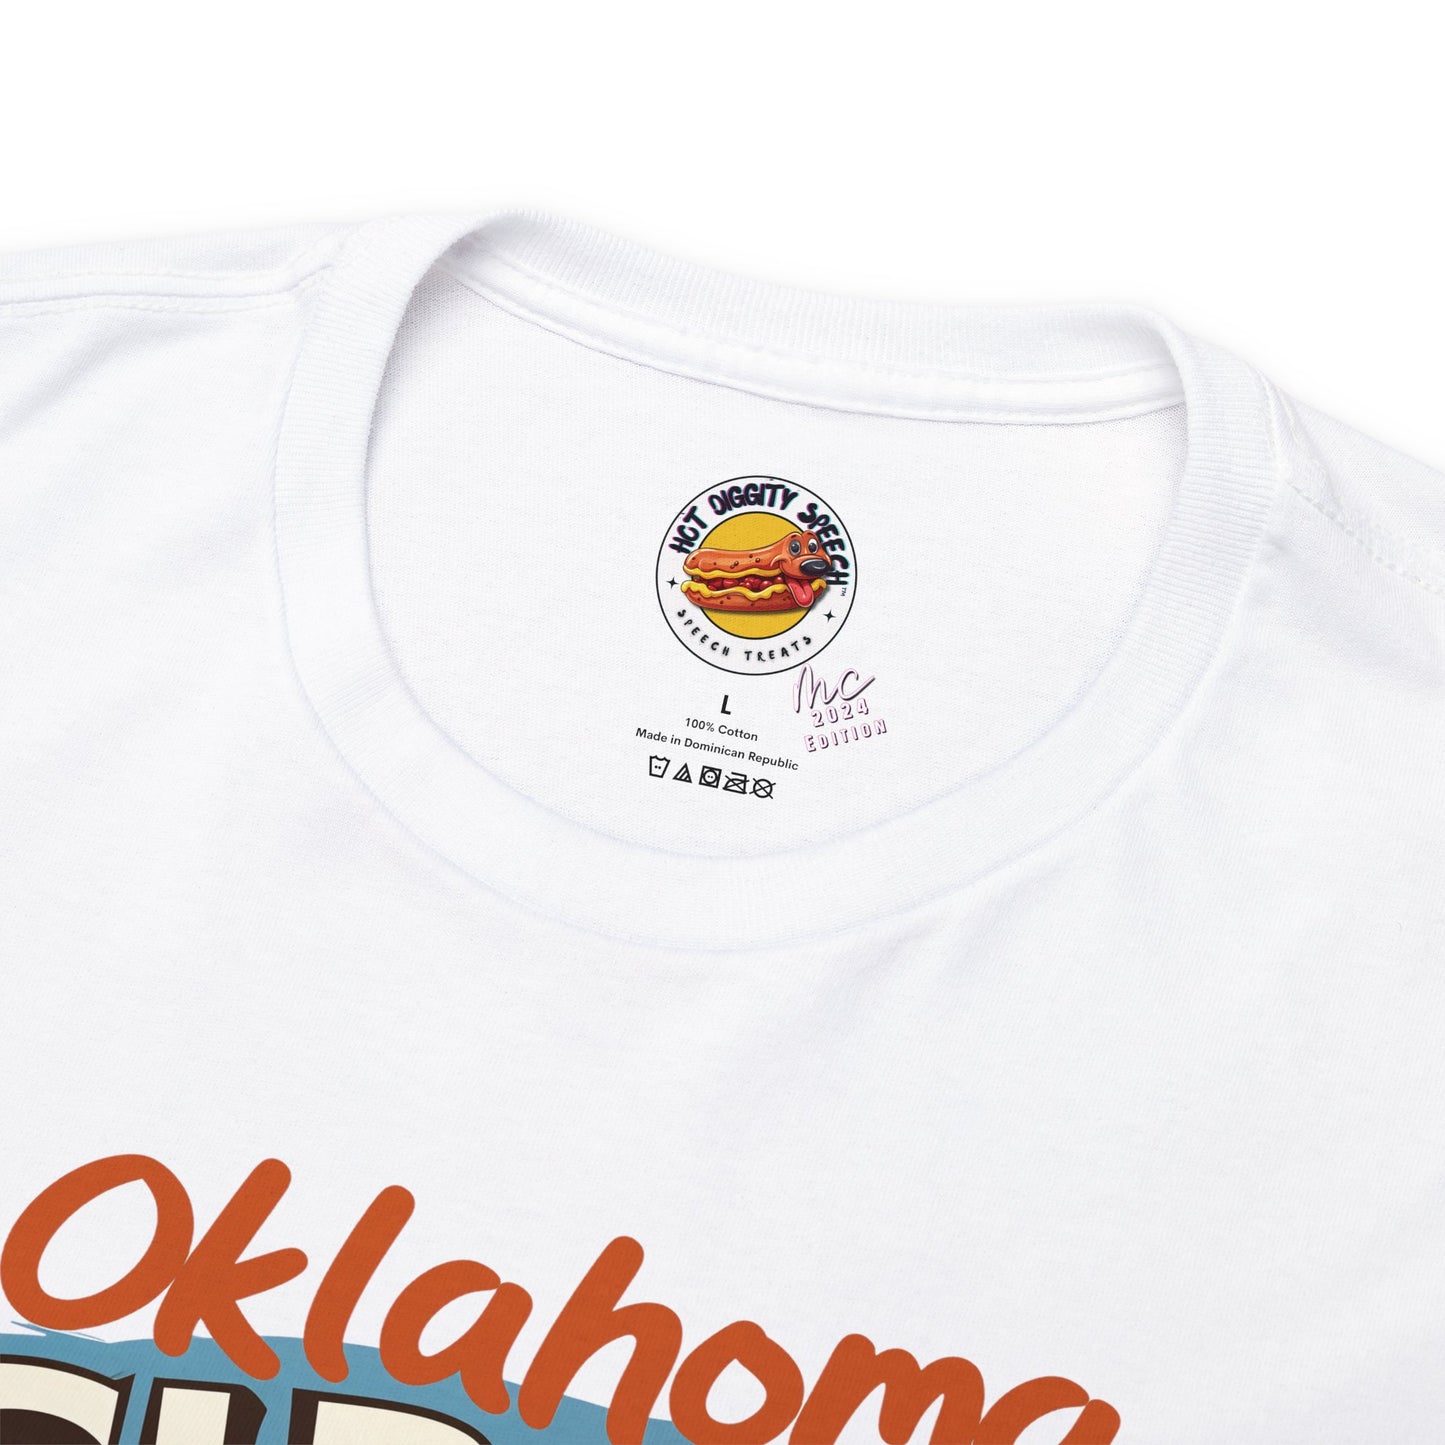 Oklahoma SLP #2 Speech Therapy Shirt